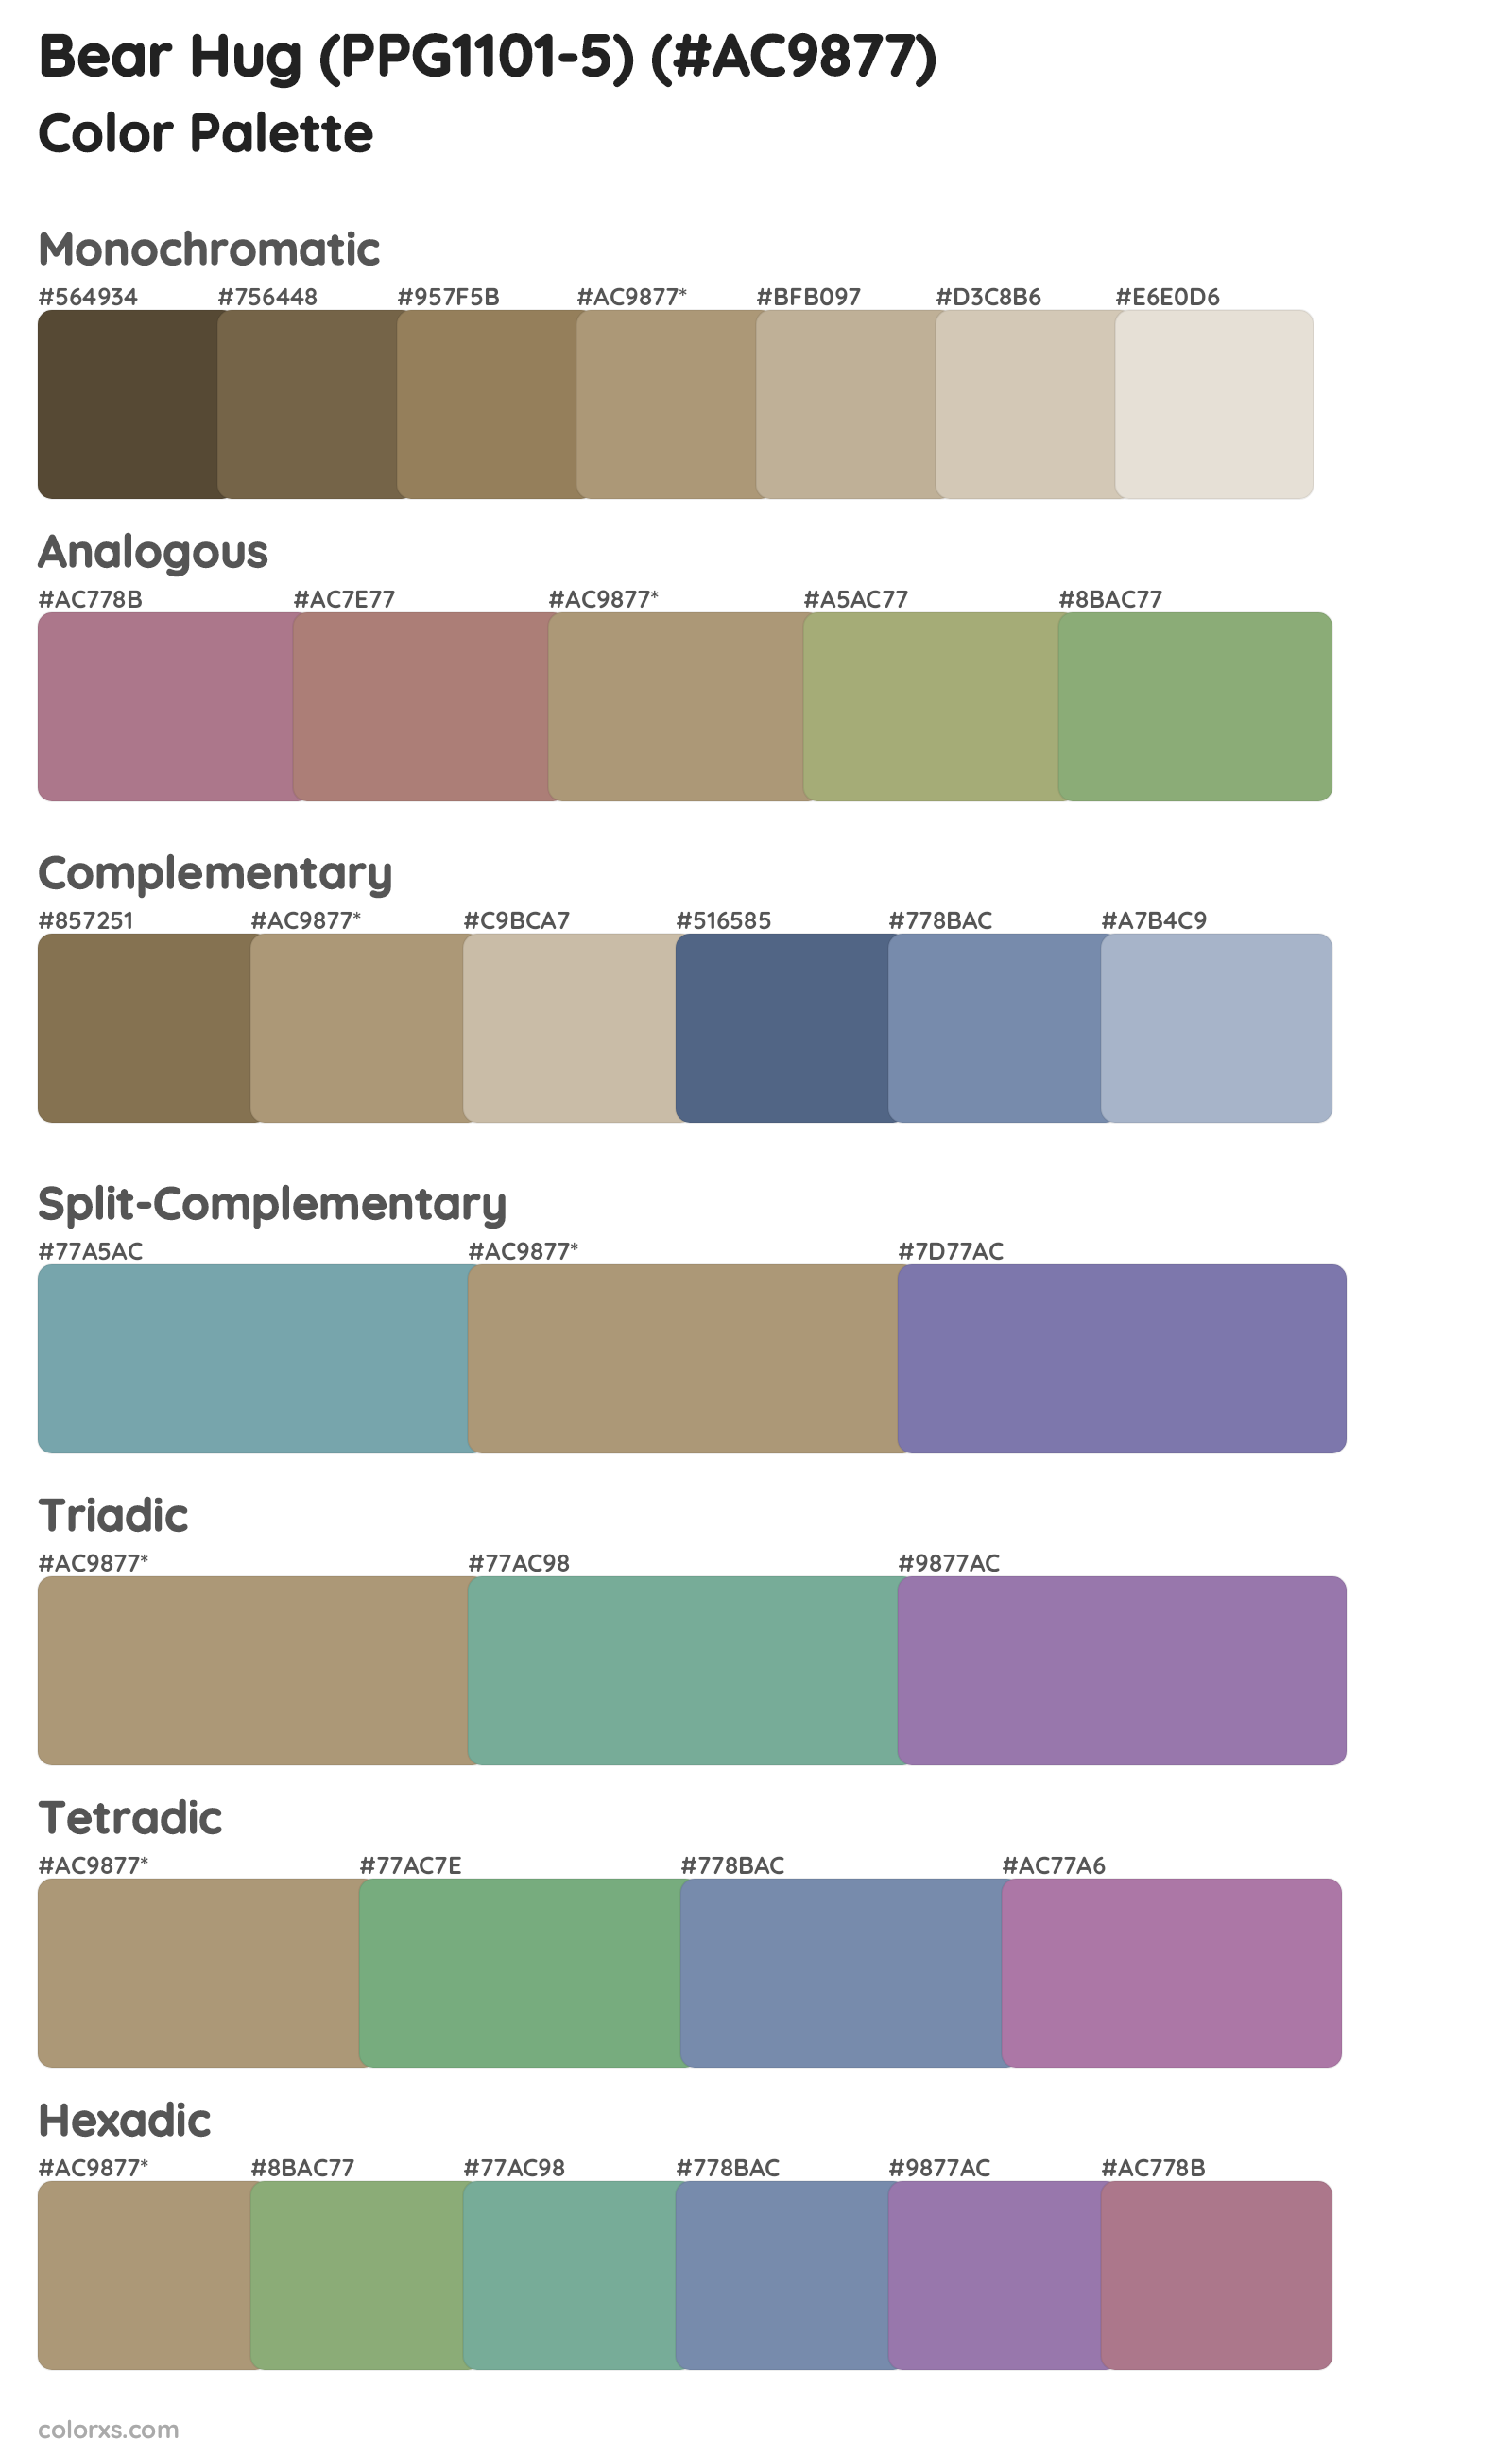 Bear Hug (PPG1101-5) Color Scheme Palettes